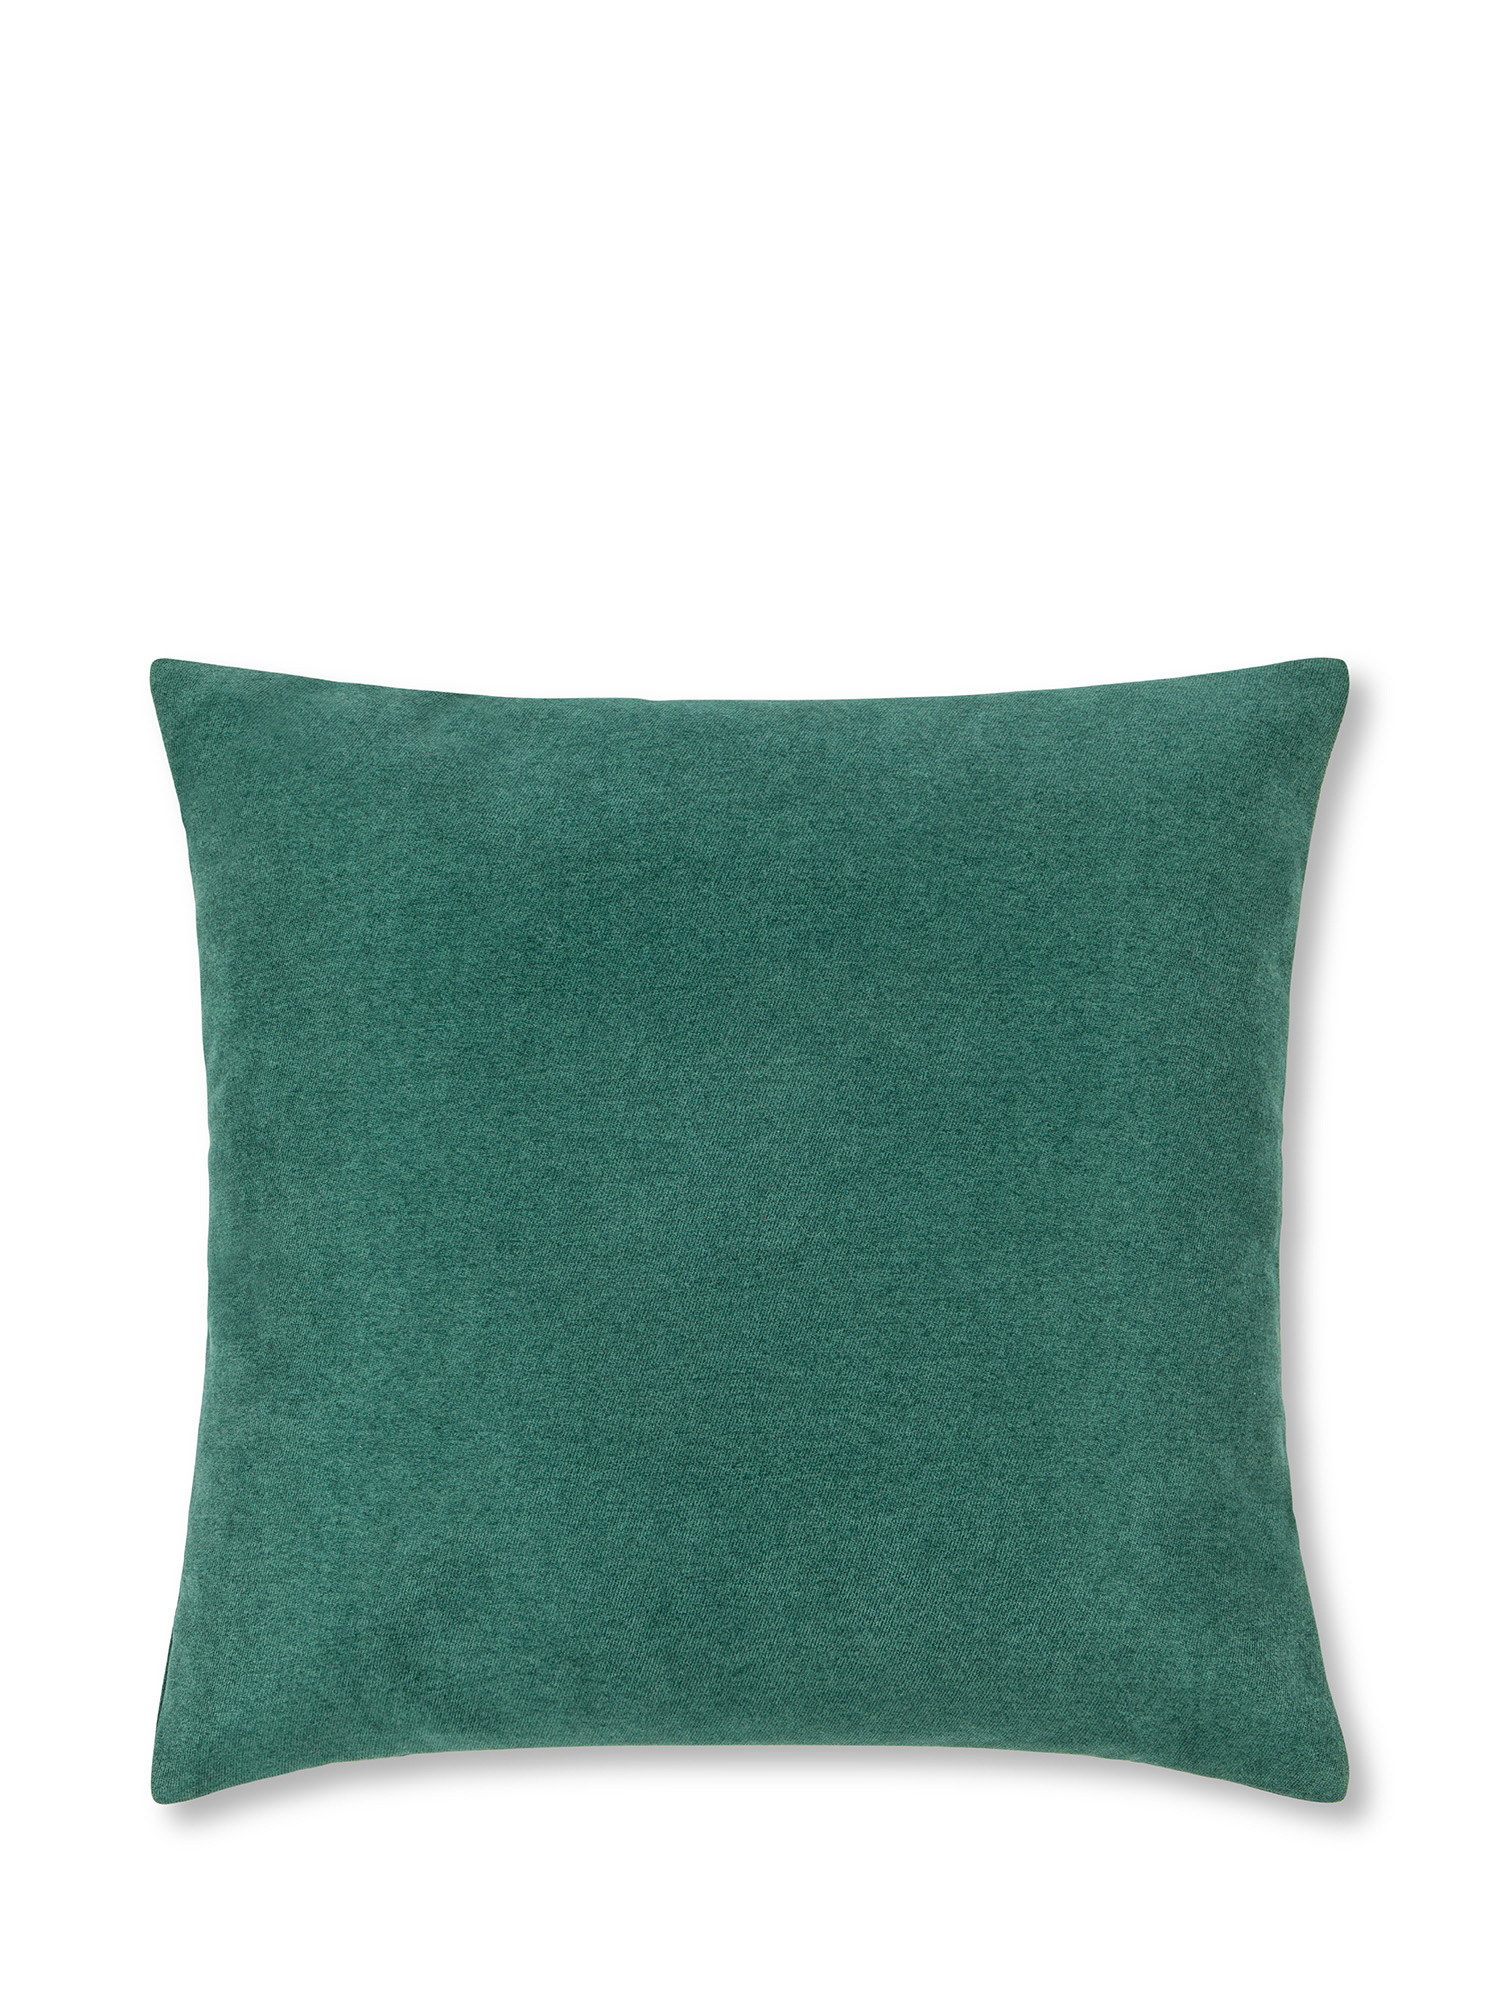 Cuscino con cuore applicato 45x45cm, Verde, large image number 1